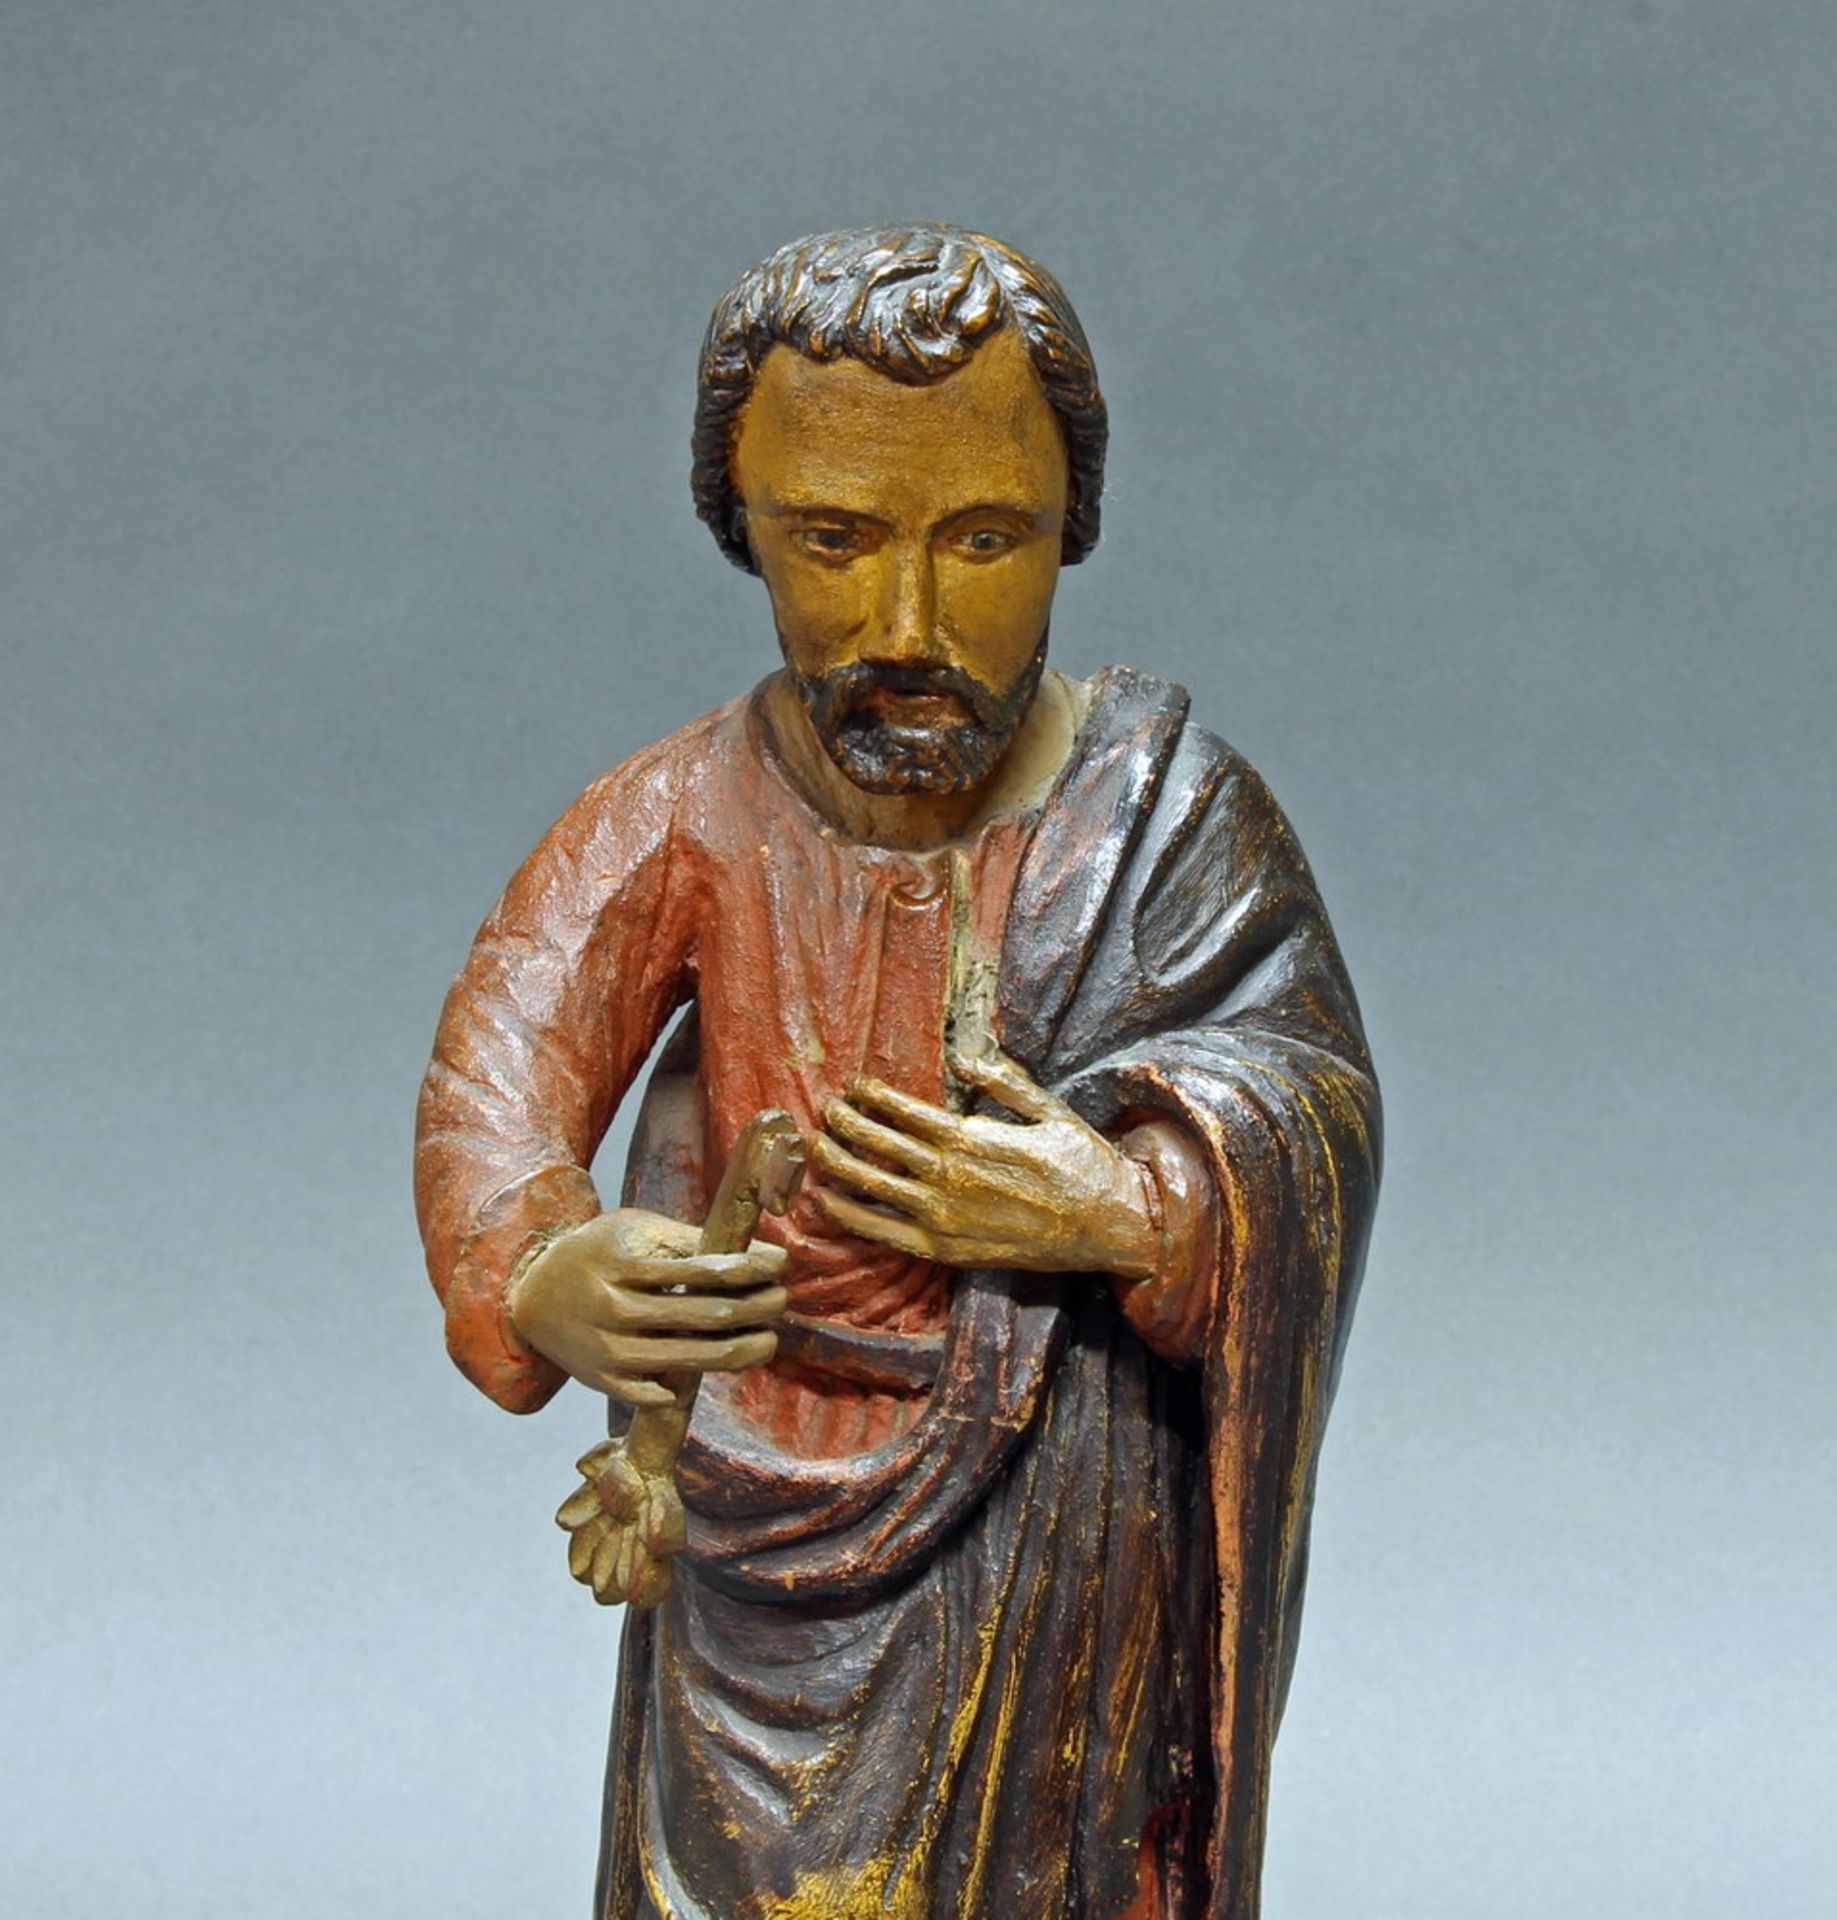 Skulptur, Holz geschnitzt, "Hl. Petrus", 19./20.Jh., farbig gefasst, 34.5 cm hoch, rechte Hand - Bild 3 aus 3